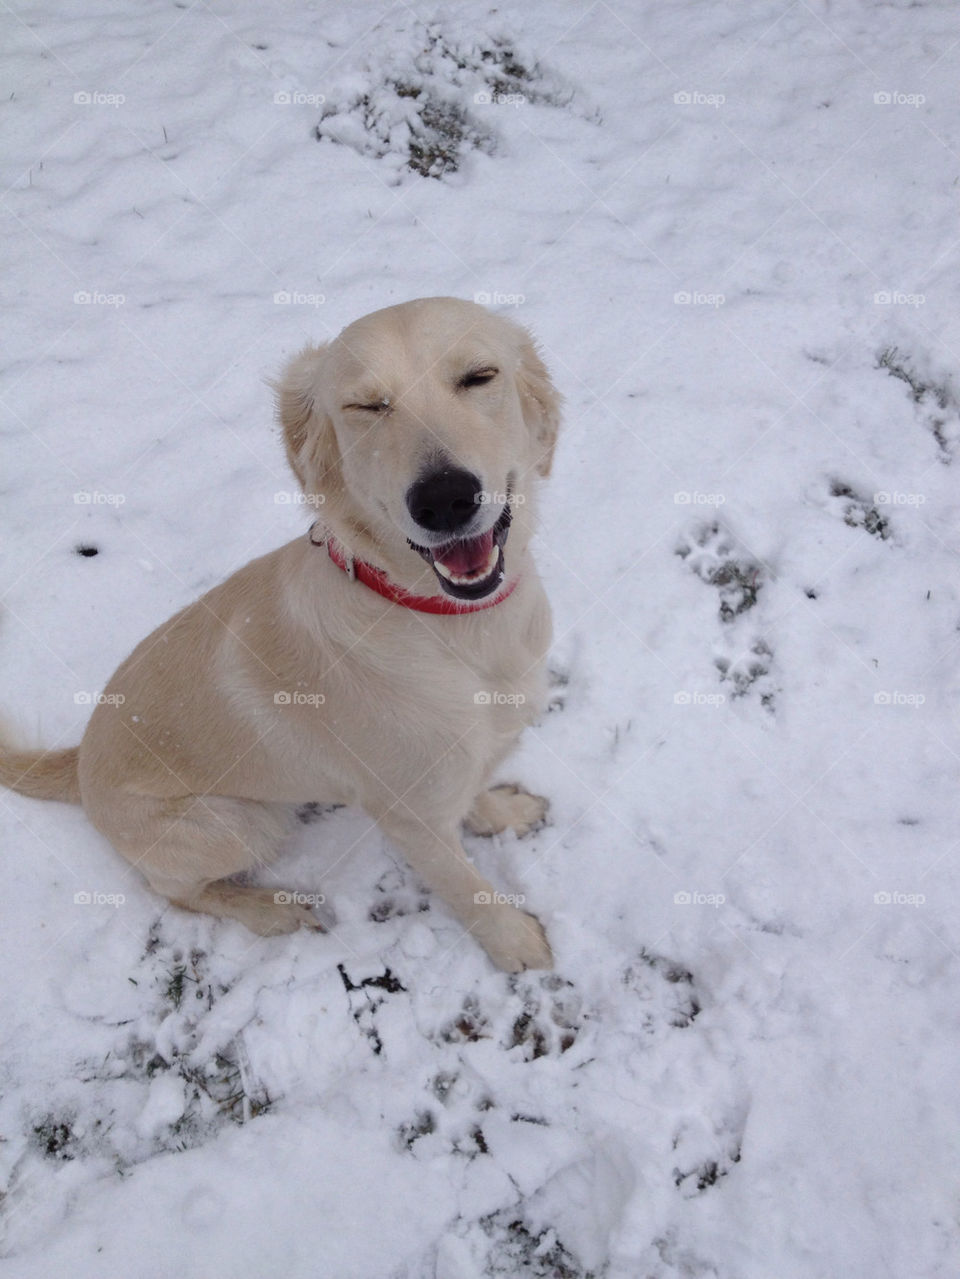 snow winter dog fun by ebruertek3